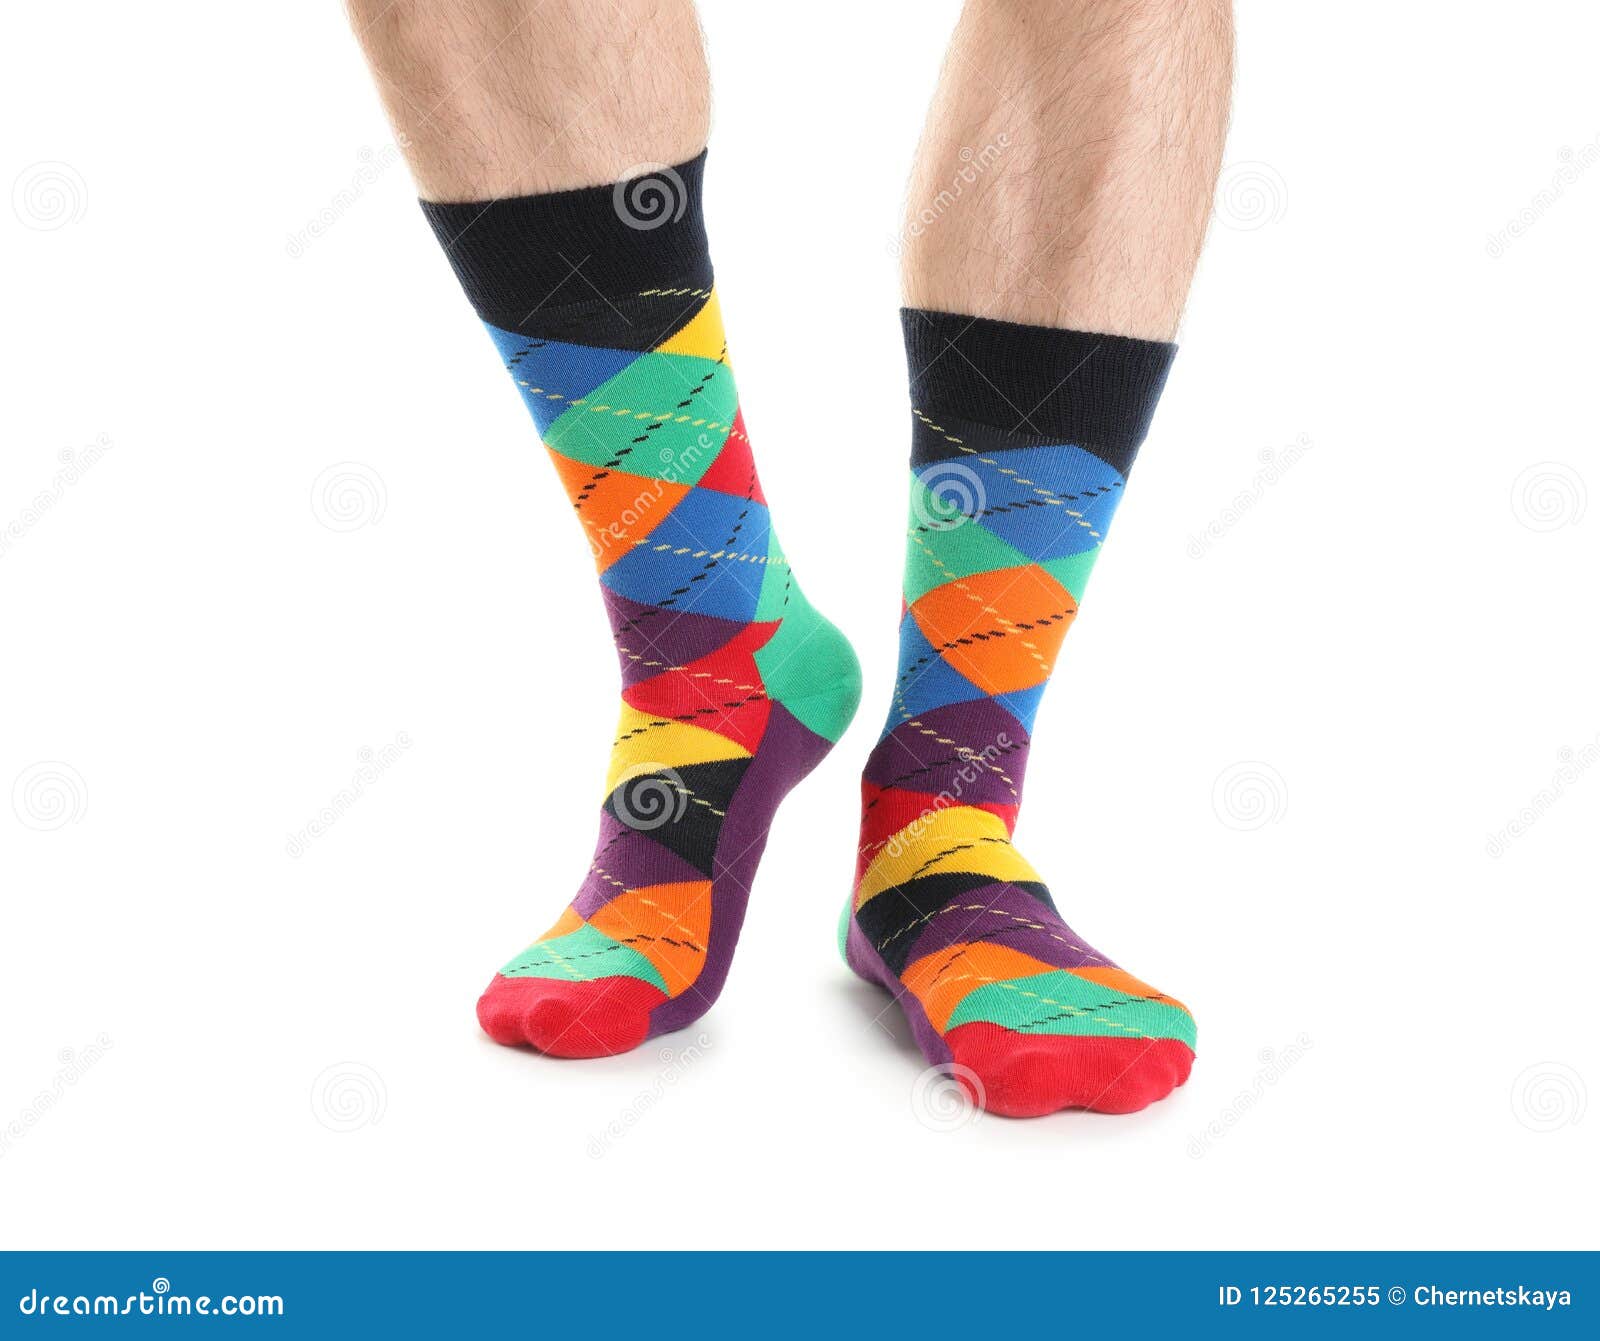 Man in Stylish Socks on White Background Stock Image - Image of hipster ...